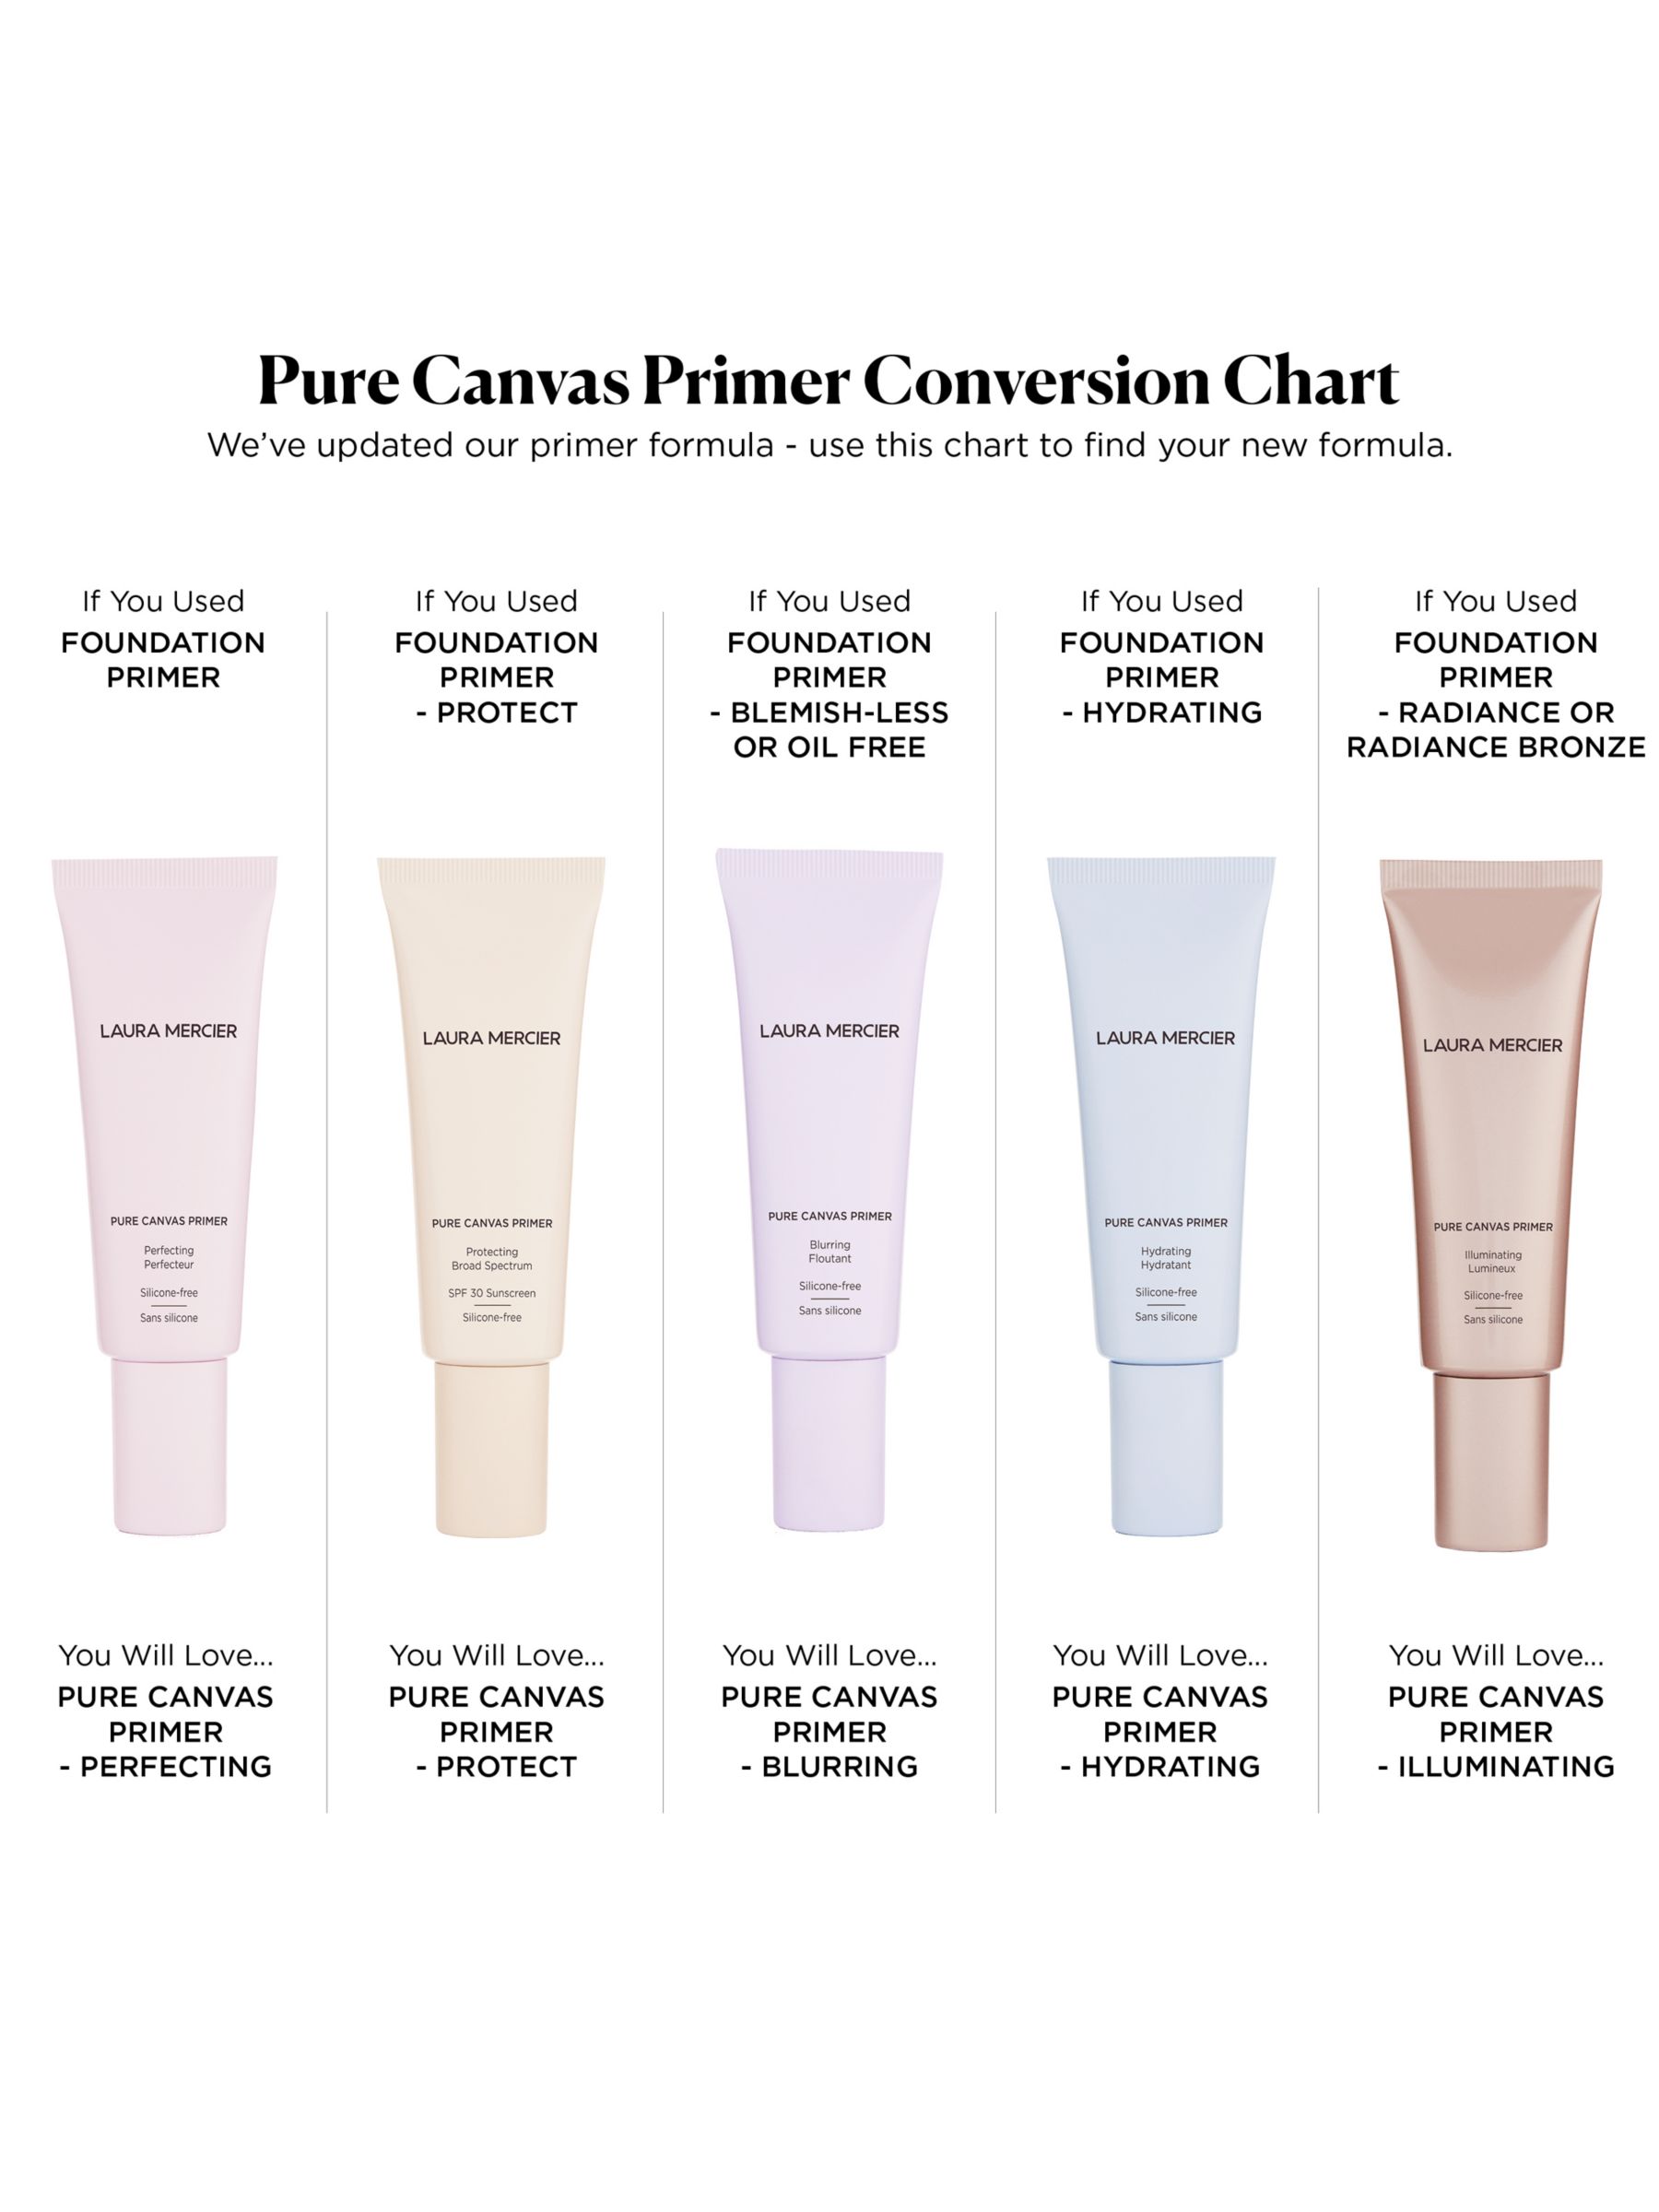 Laura Mercier Pure Canvas Power Primer Supercharged Essence, 30ml